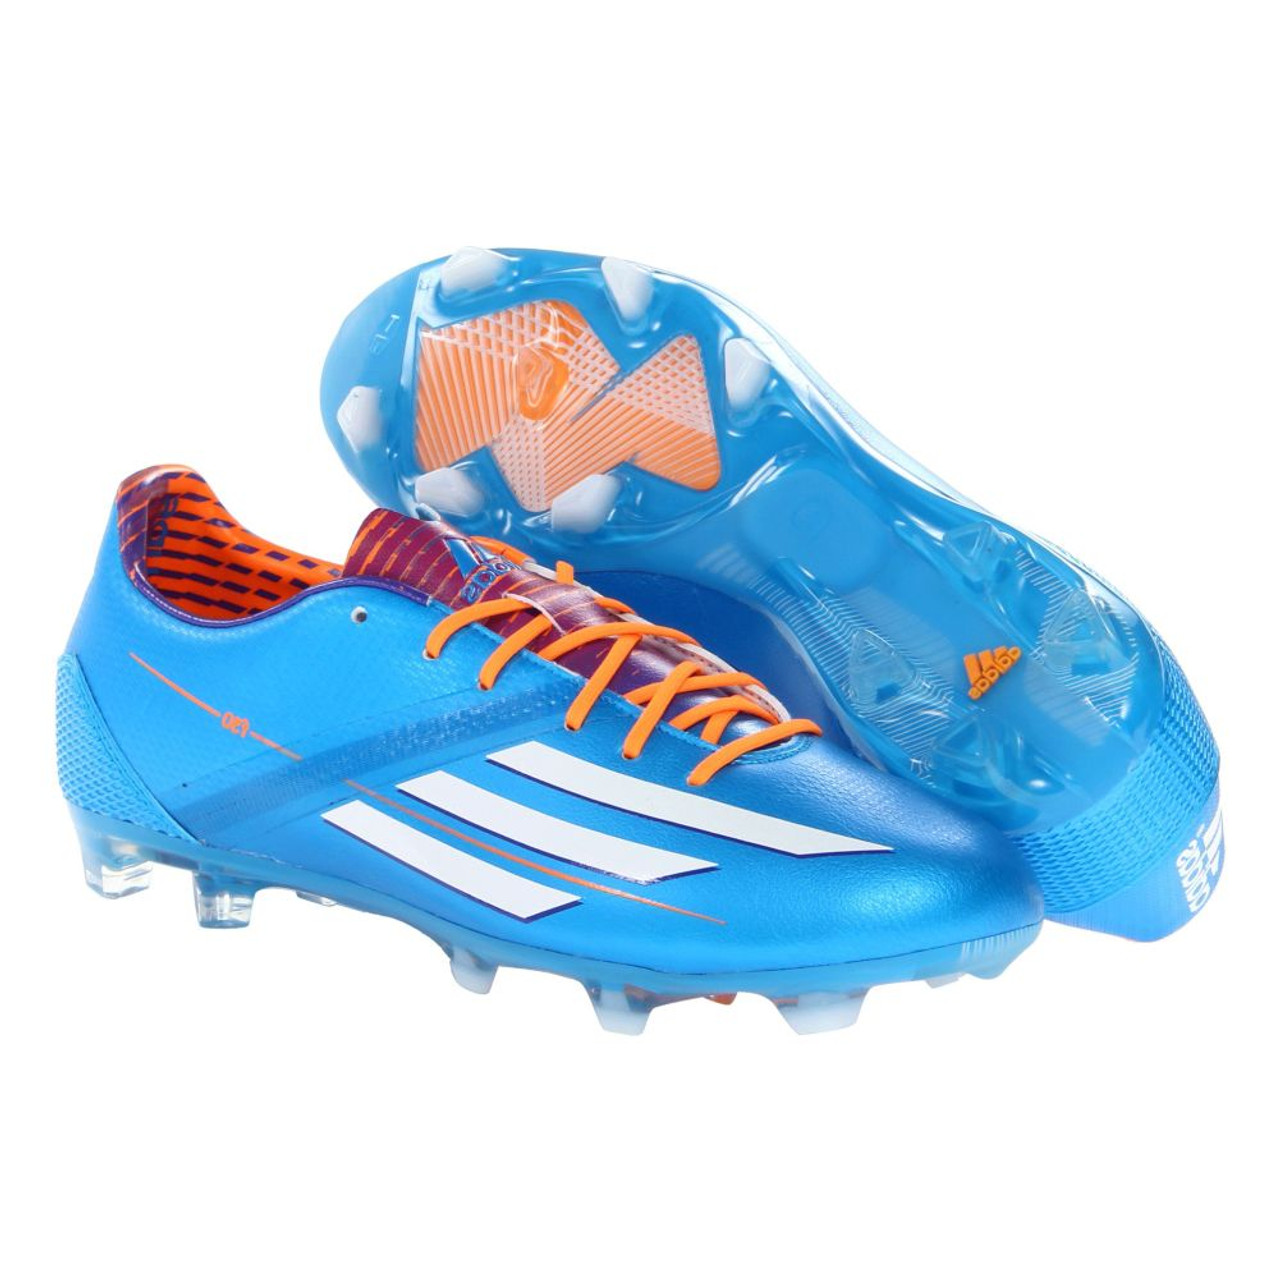 welvaart Baby Triatleet Adidas Men's F30 TRX FG Soccer Cleats - Solar Blue/White/Zest/Running White/ Solar Zest | Discount Adidas Men's Athletic Shoes & More - Shoolu.com |  Shoolu.com